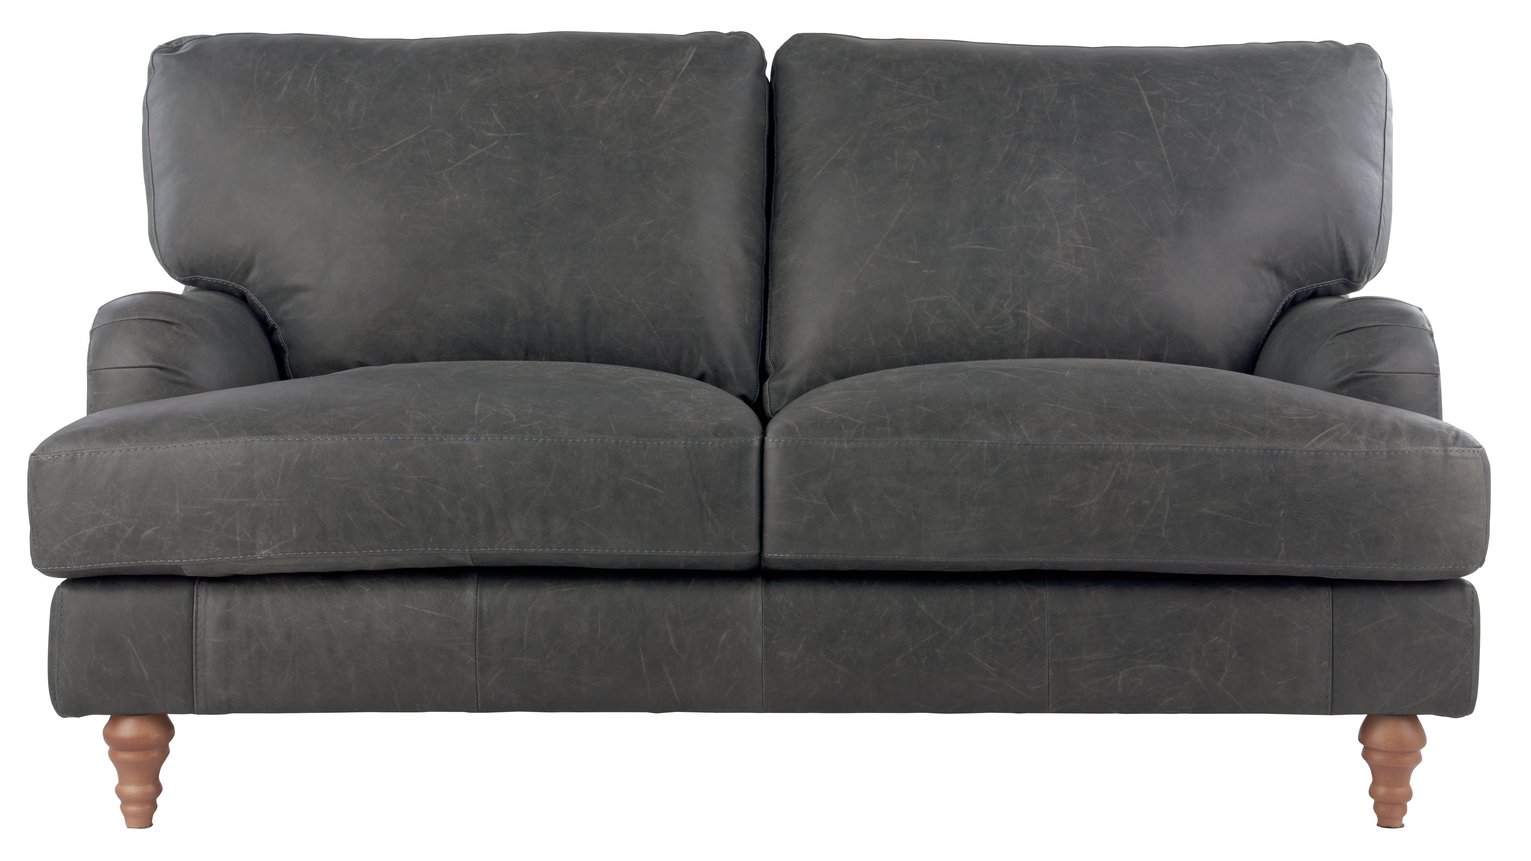 Argos Home Livingston 2 Seater Leather Sofa - Ash Grey